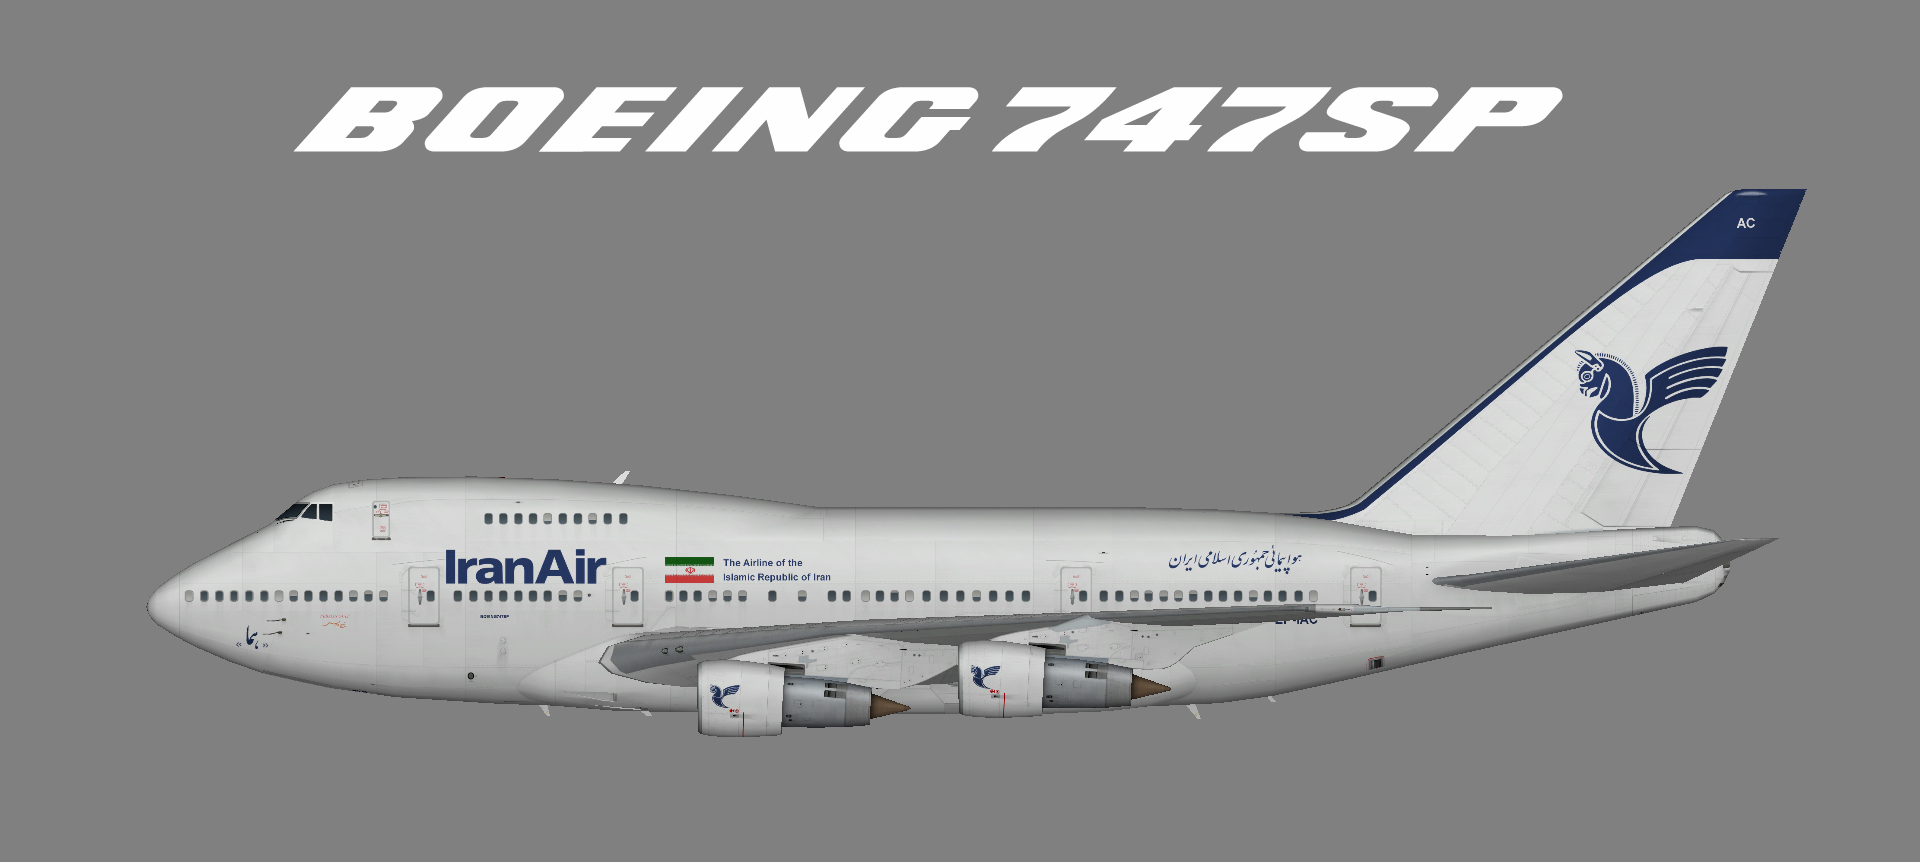 Iran Air 747SP